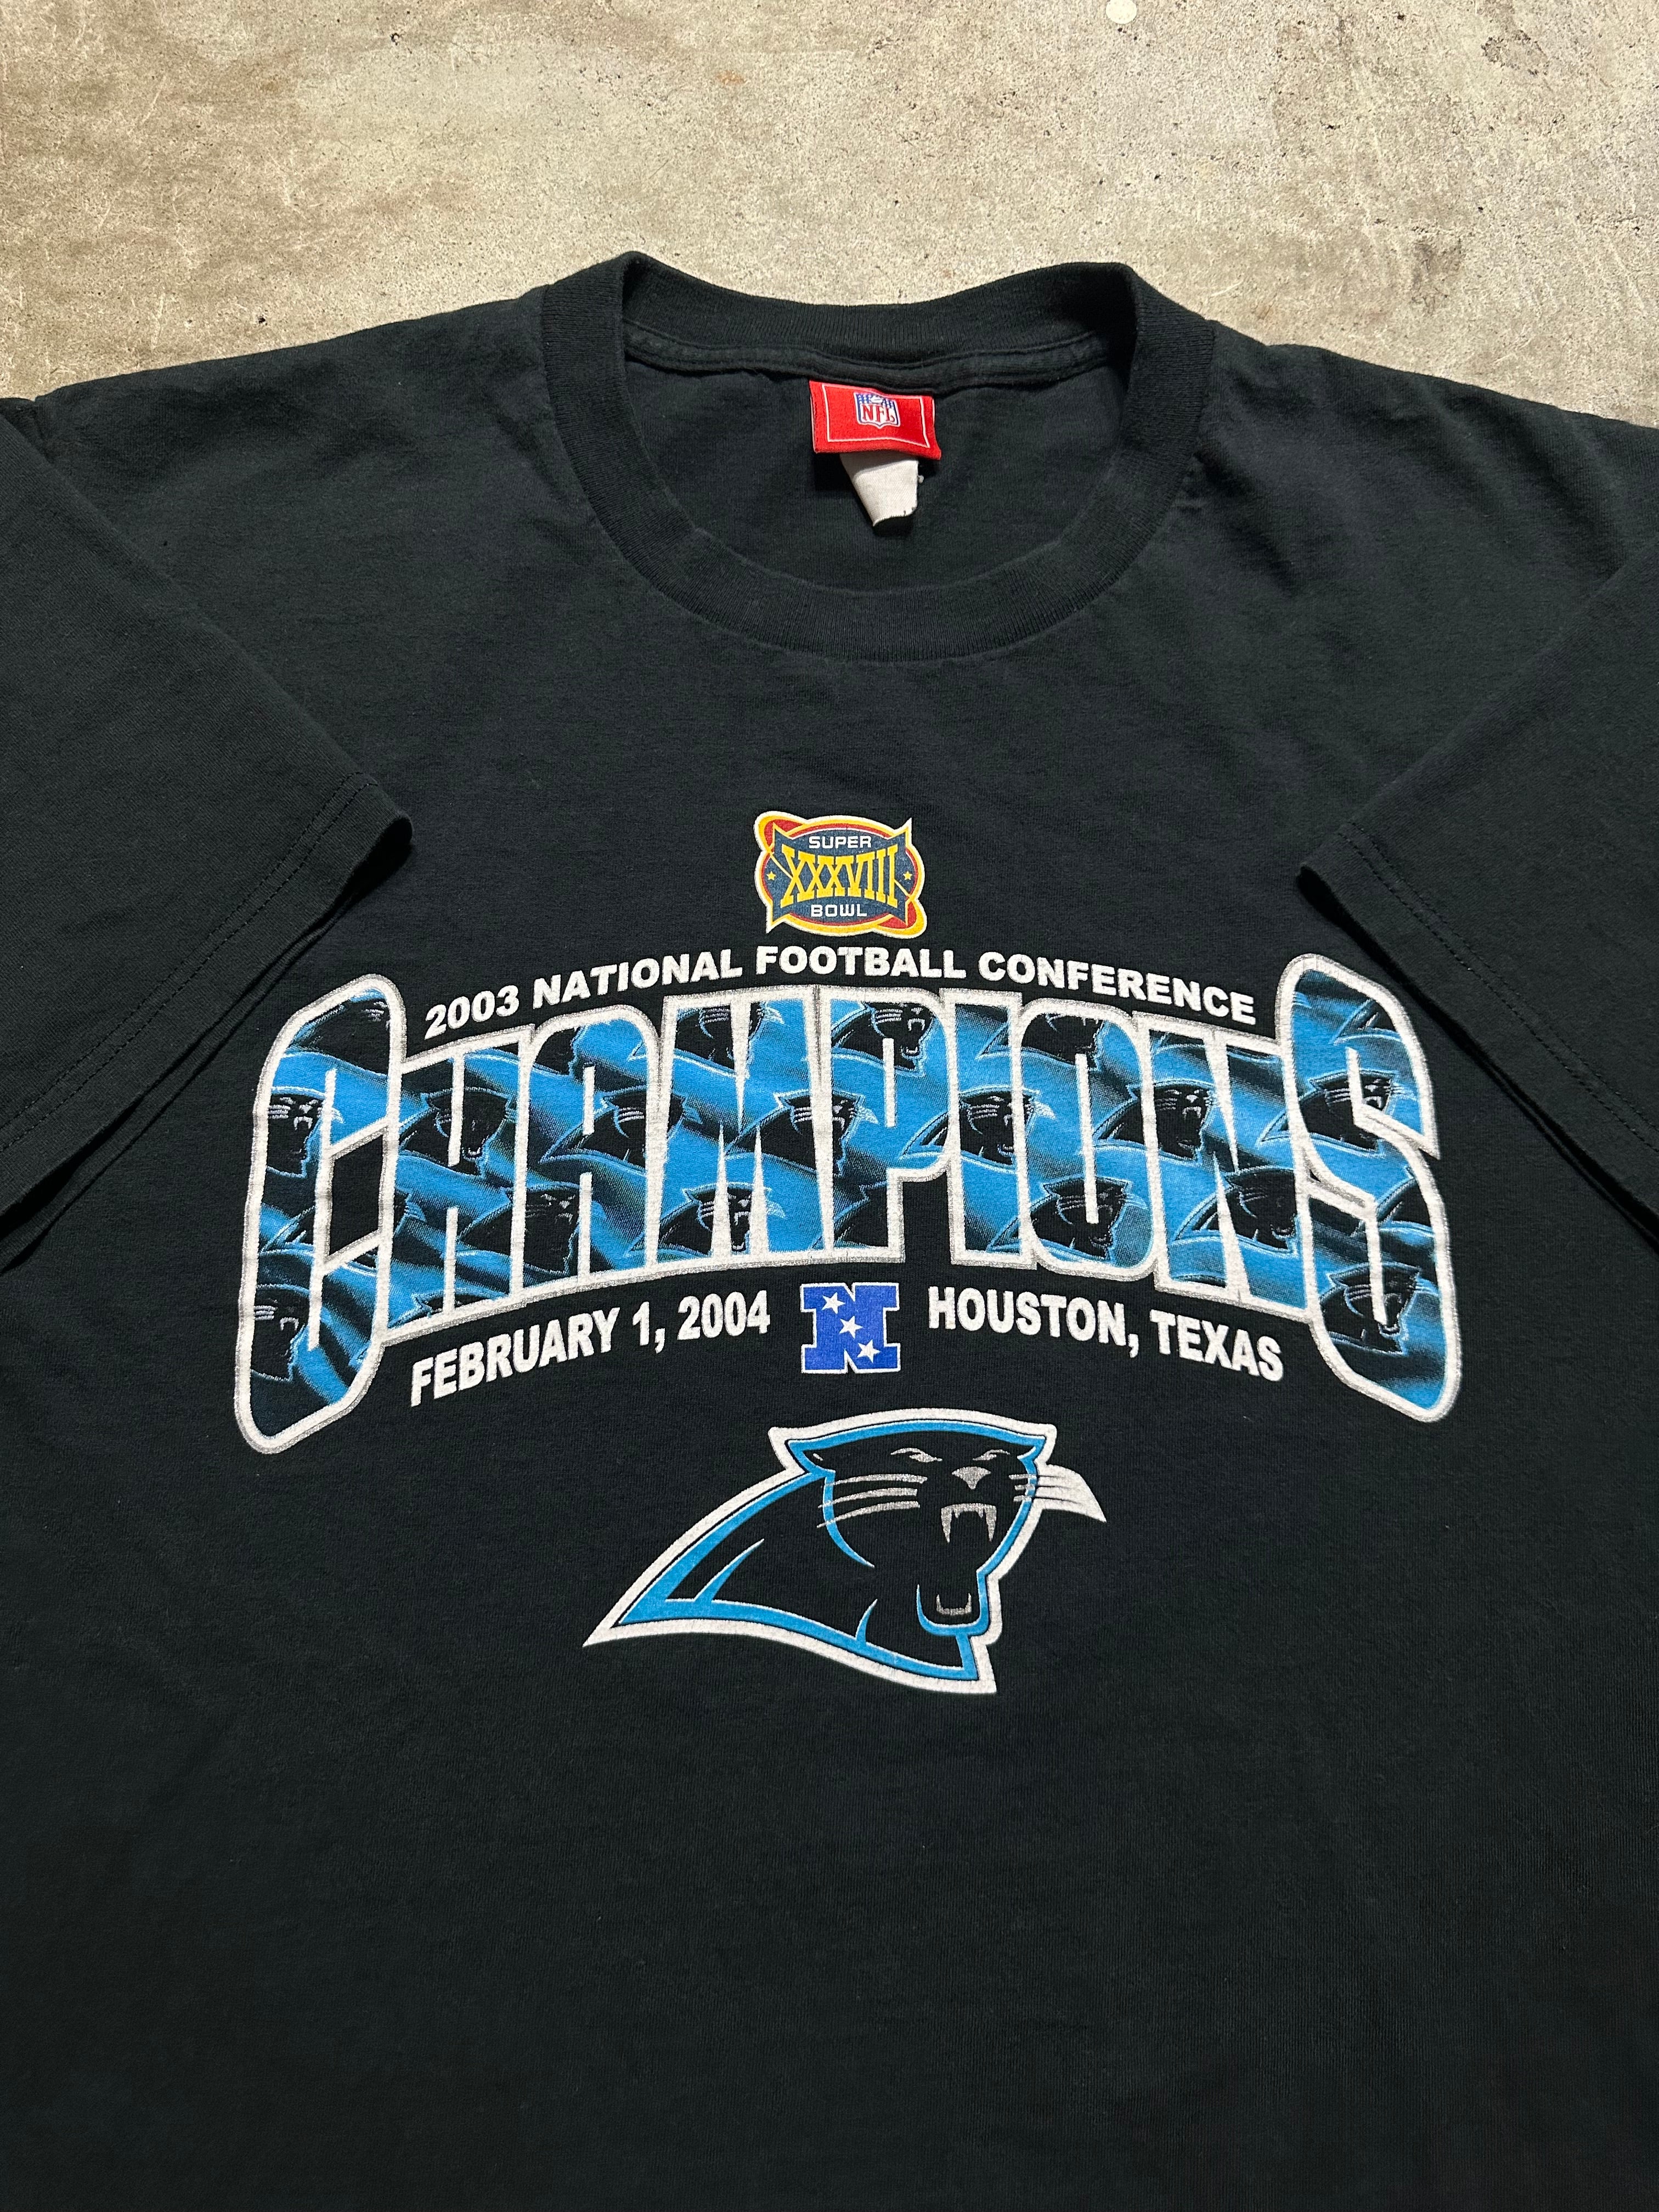 Carolina Panthers Retro Football Unisex T-Shirt